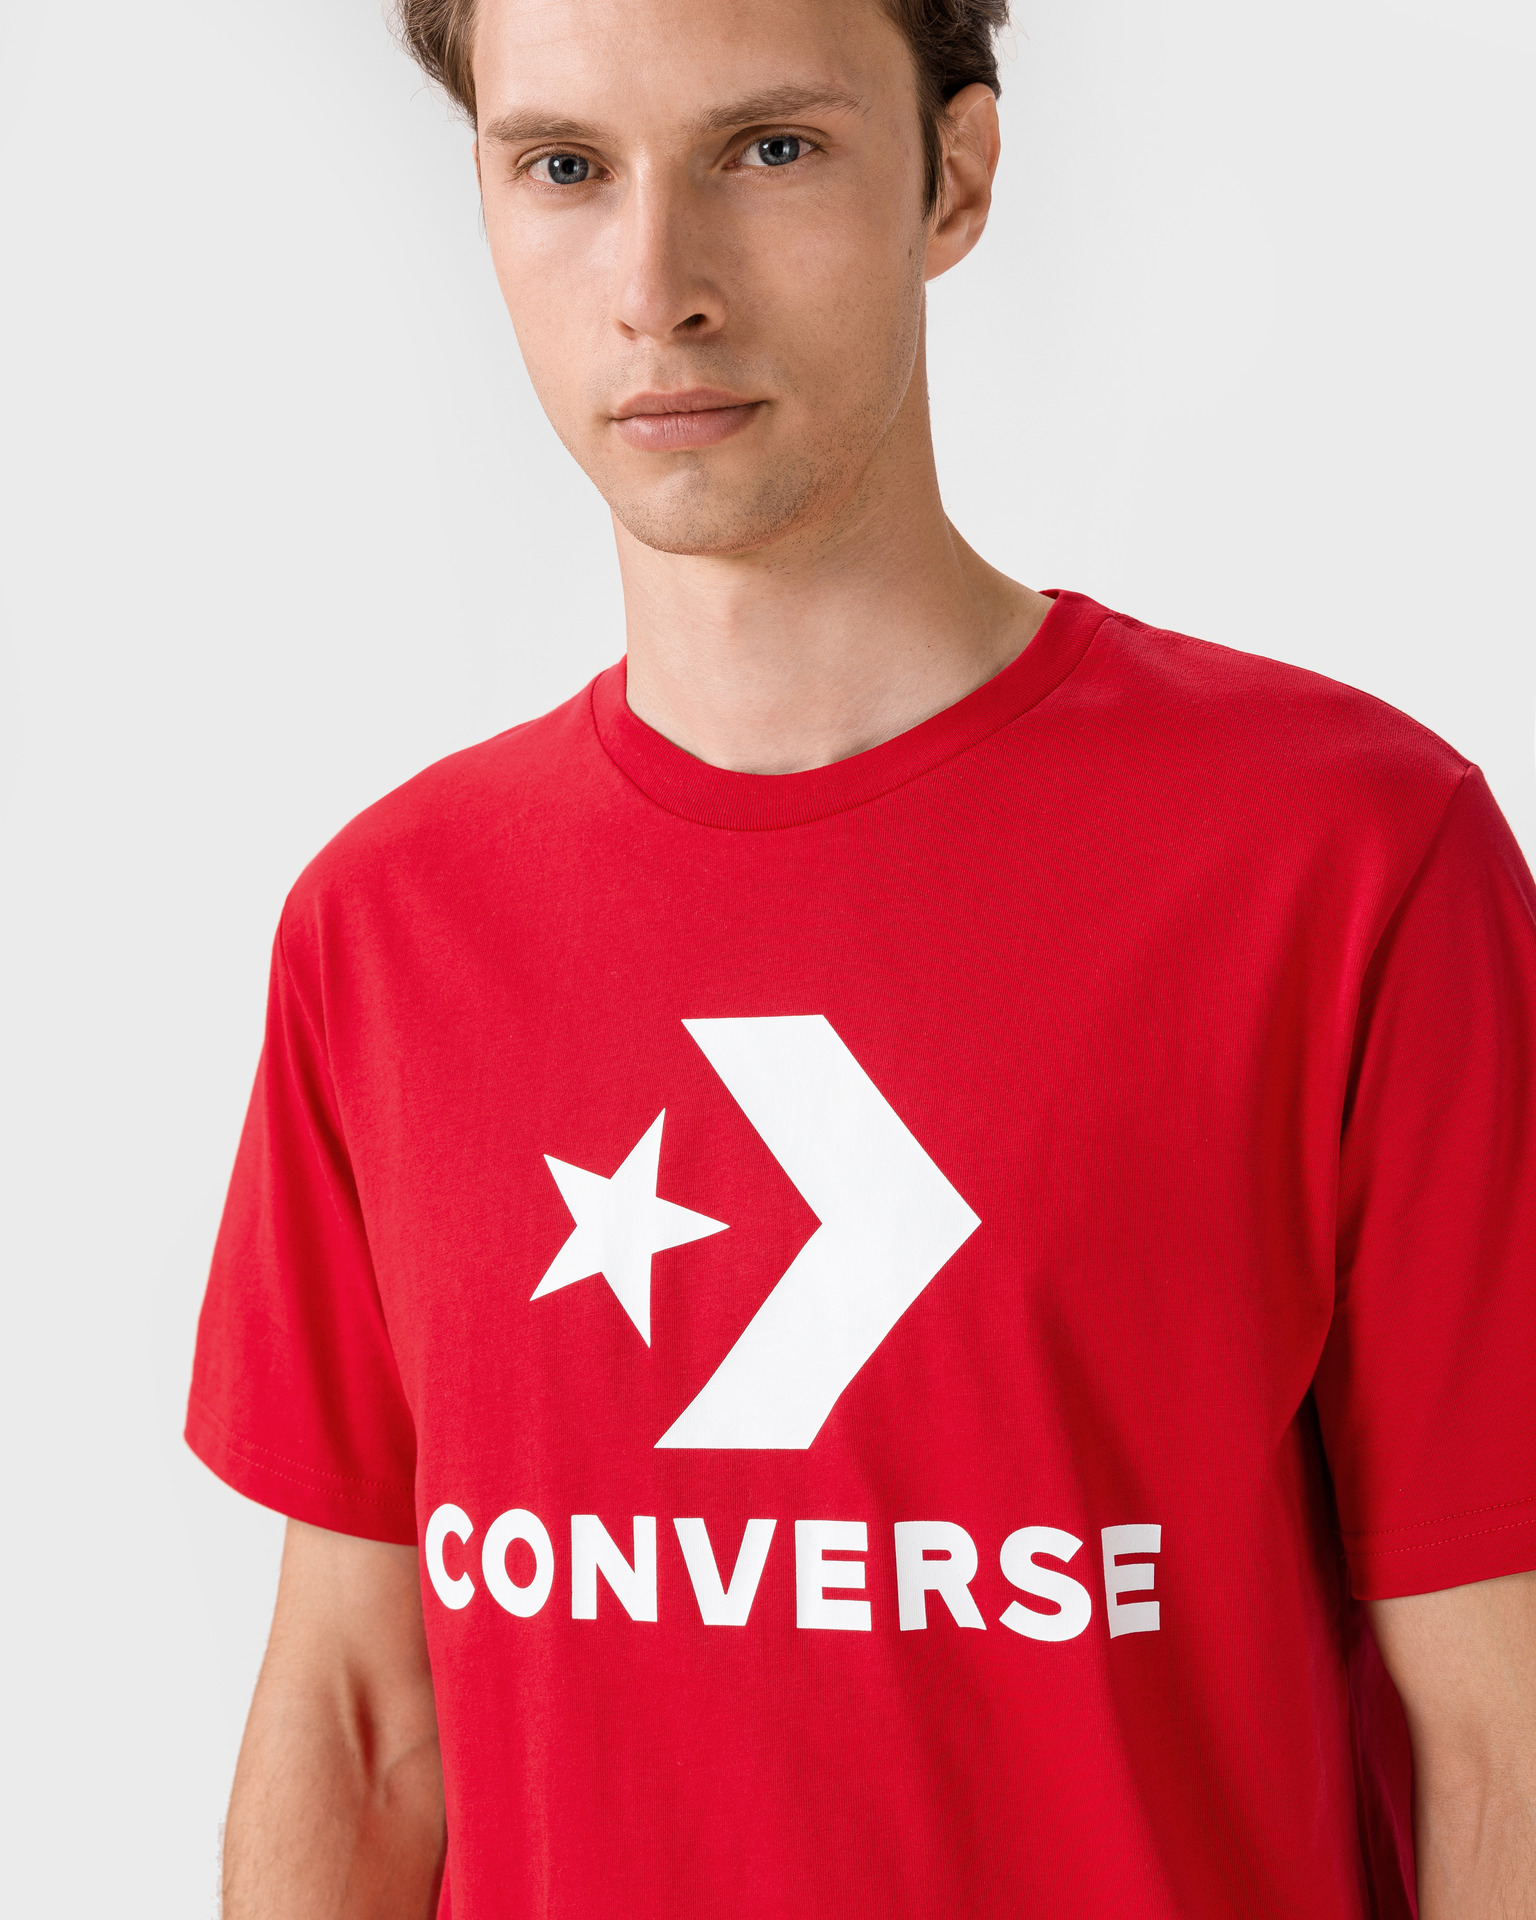 converse t shirt sale